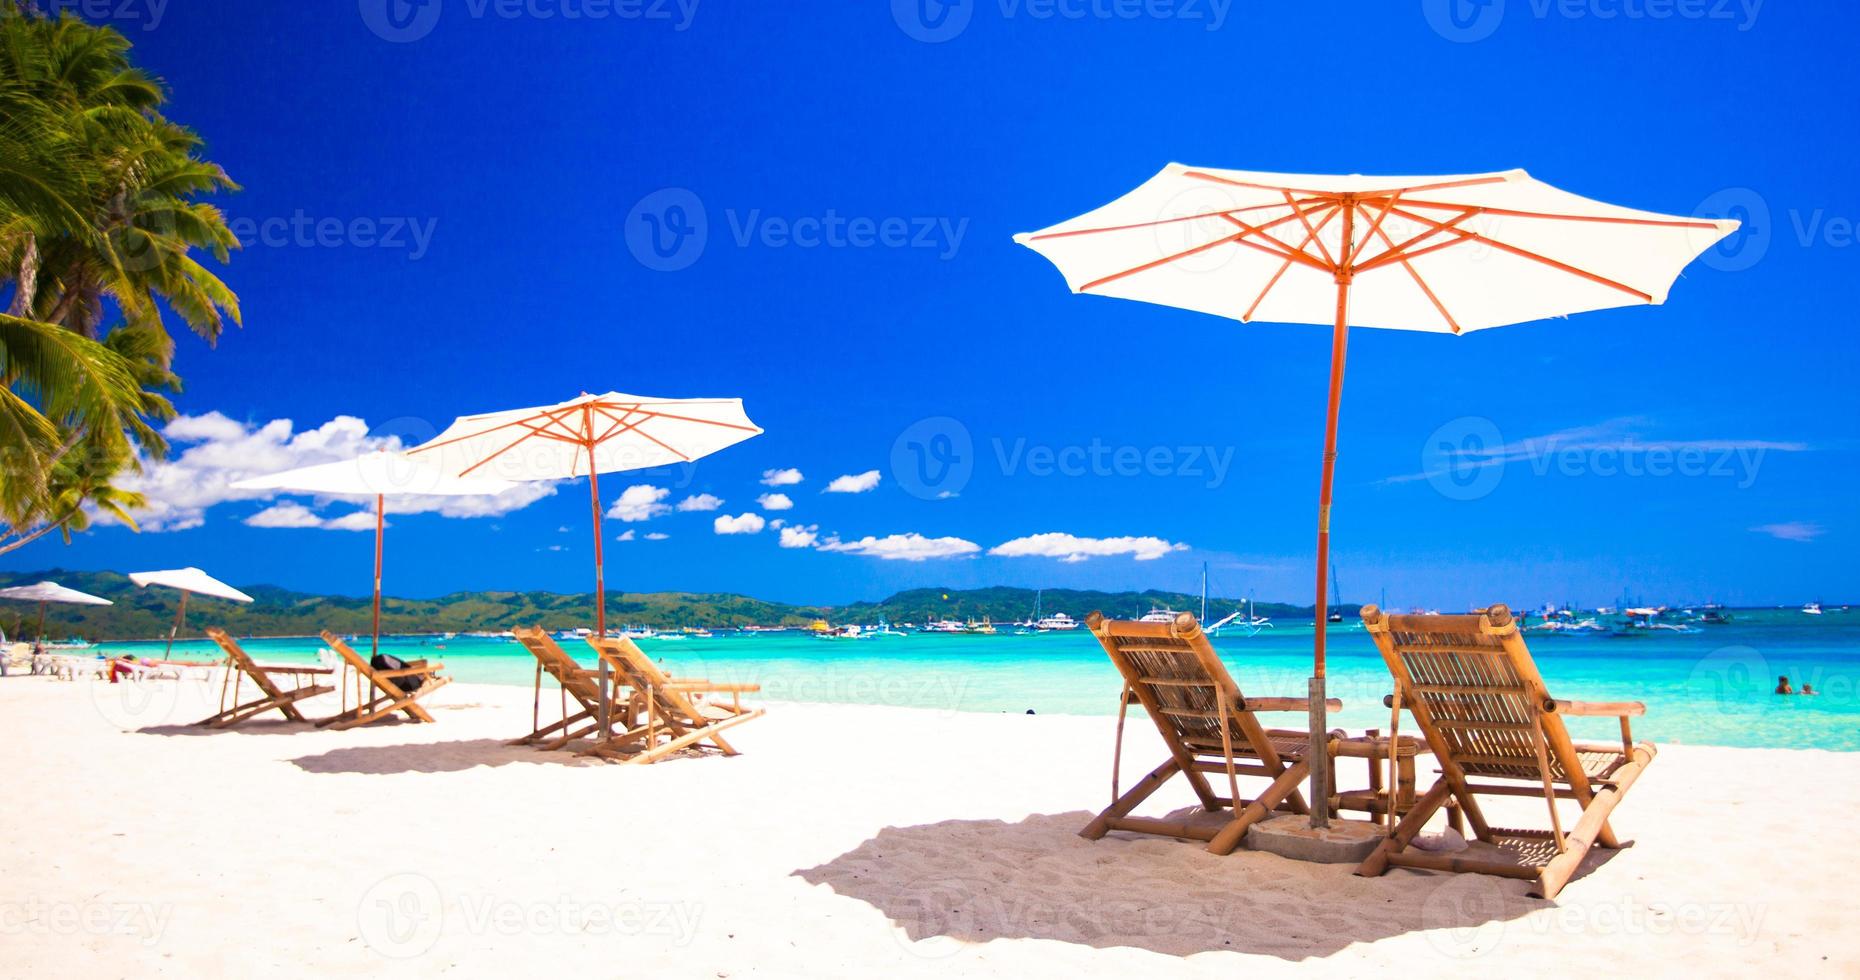 sedie a sdraio sulla spiaggia di sabbia bianca tropicale esotica foto